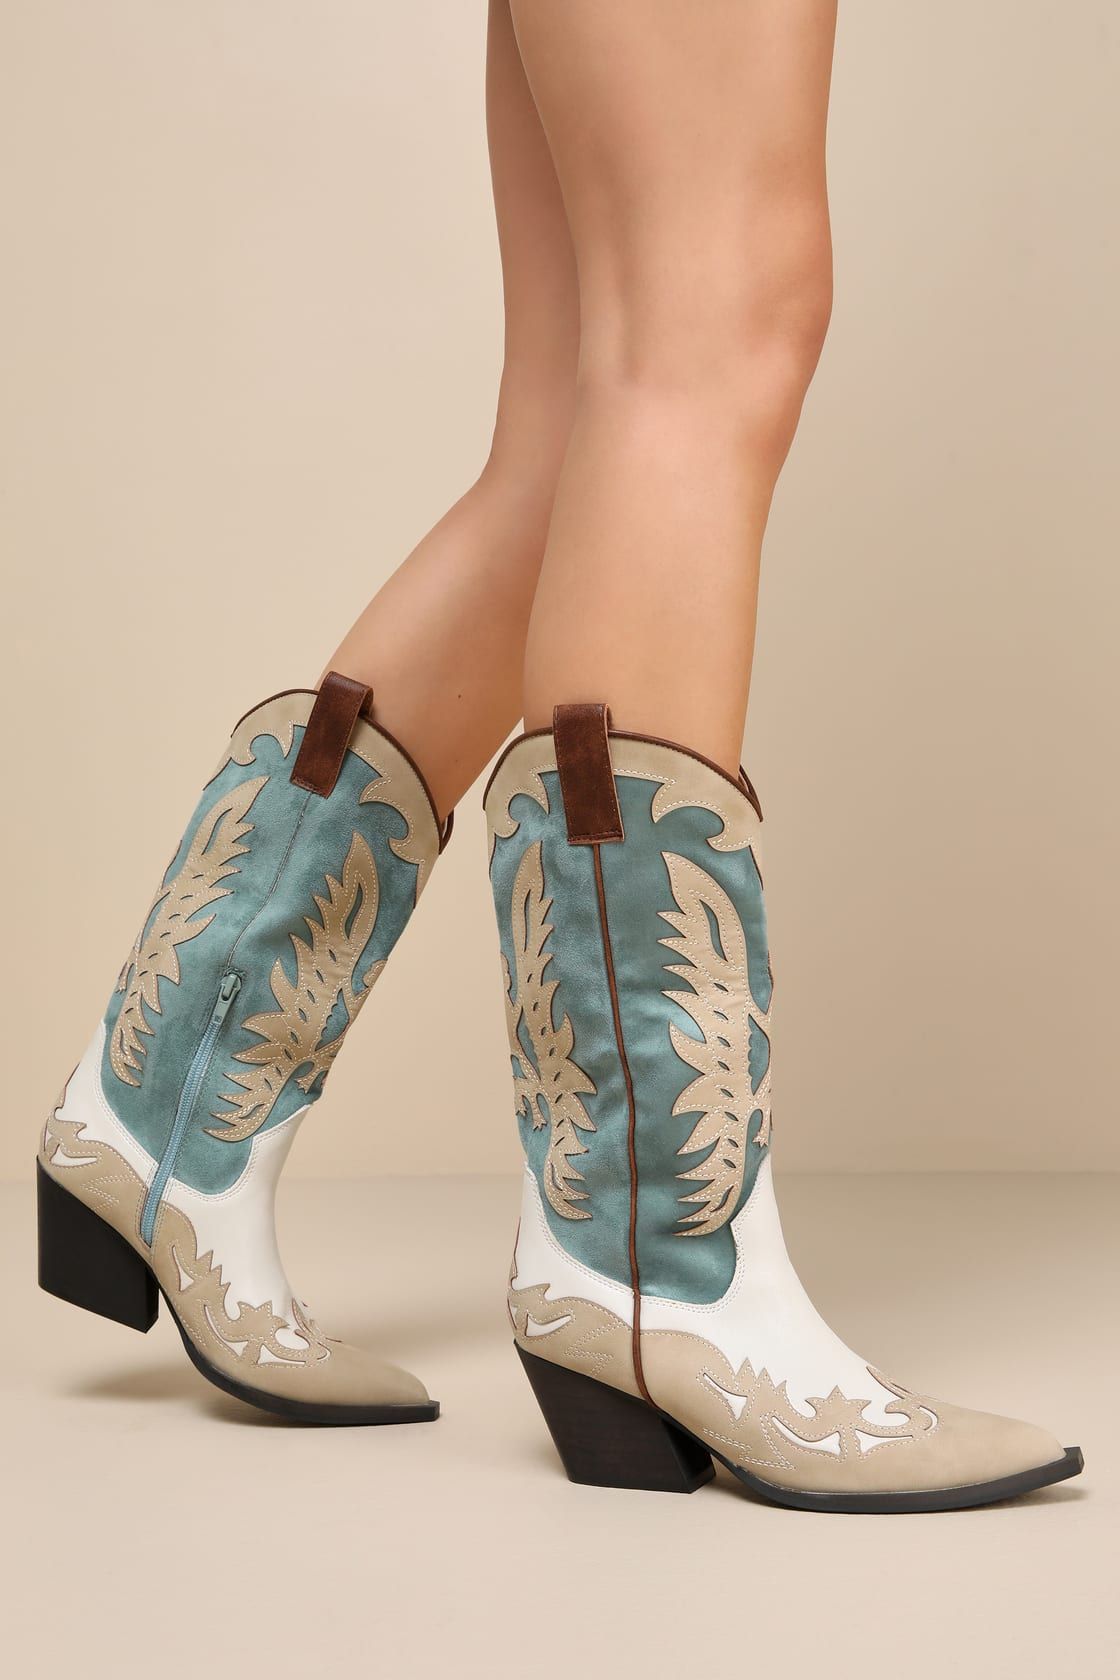 Elinoah Blue Color Block Pointed-Toe Mid-Calf Western Boots | Lulus